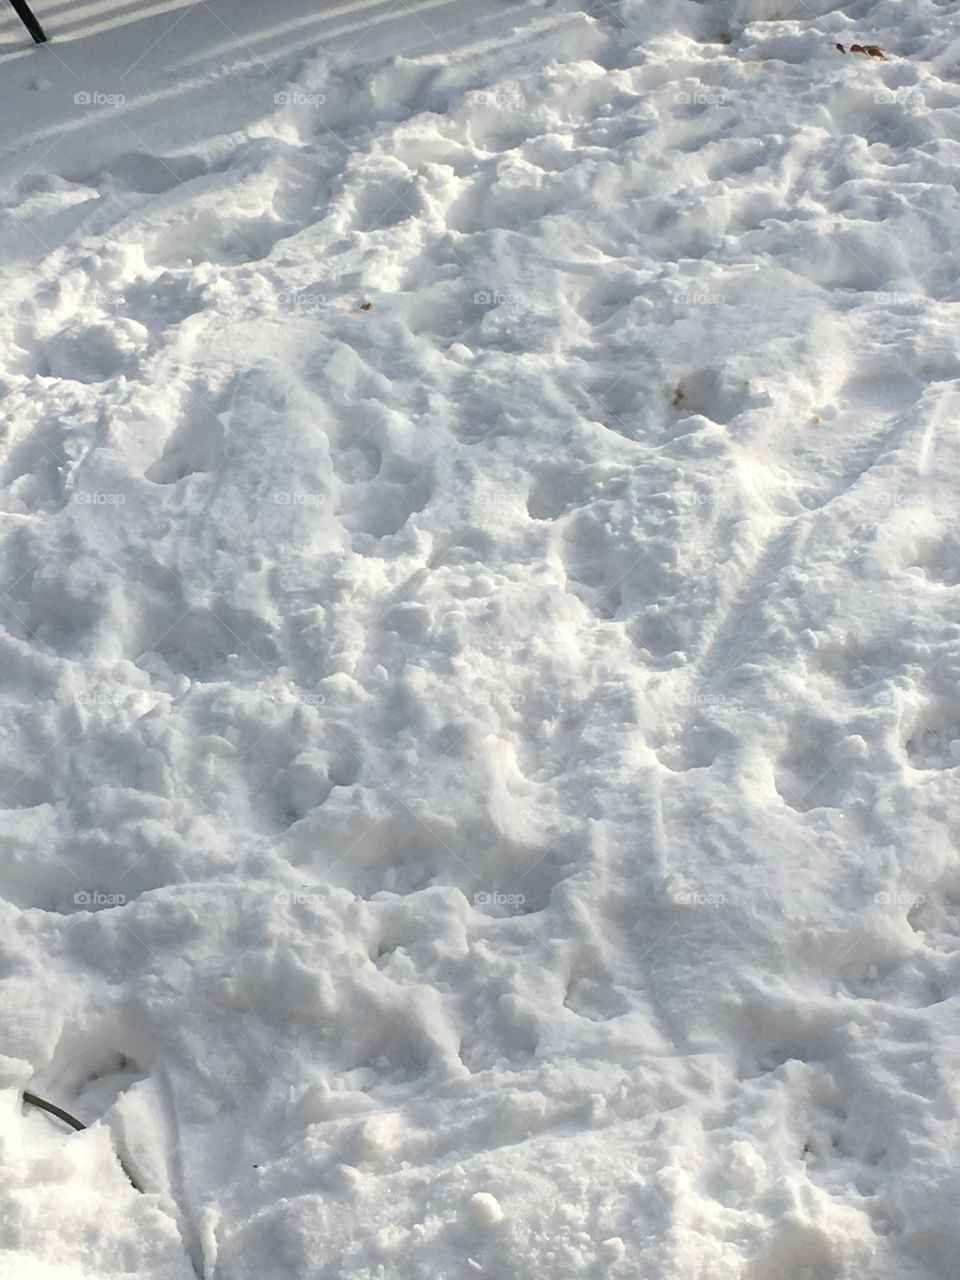 Animal tracks littering snow